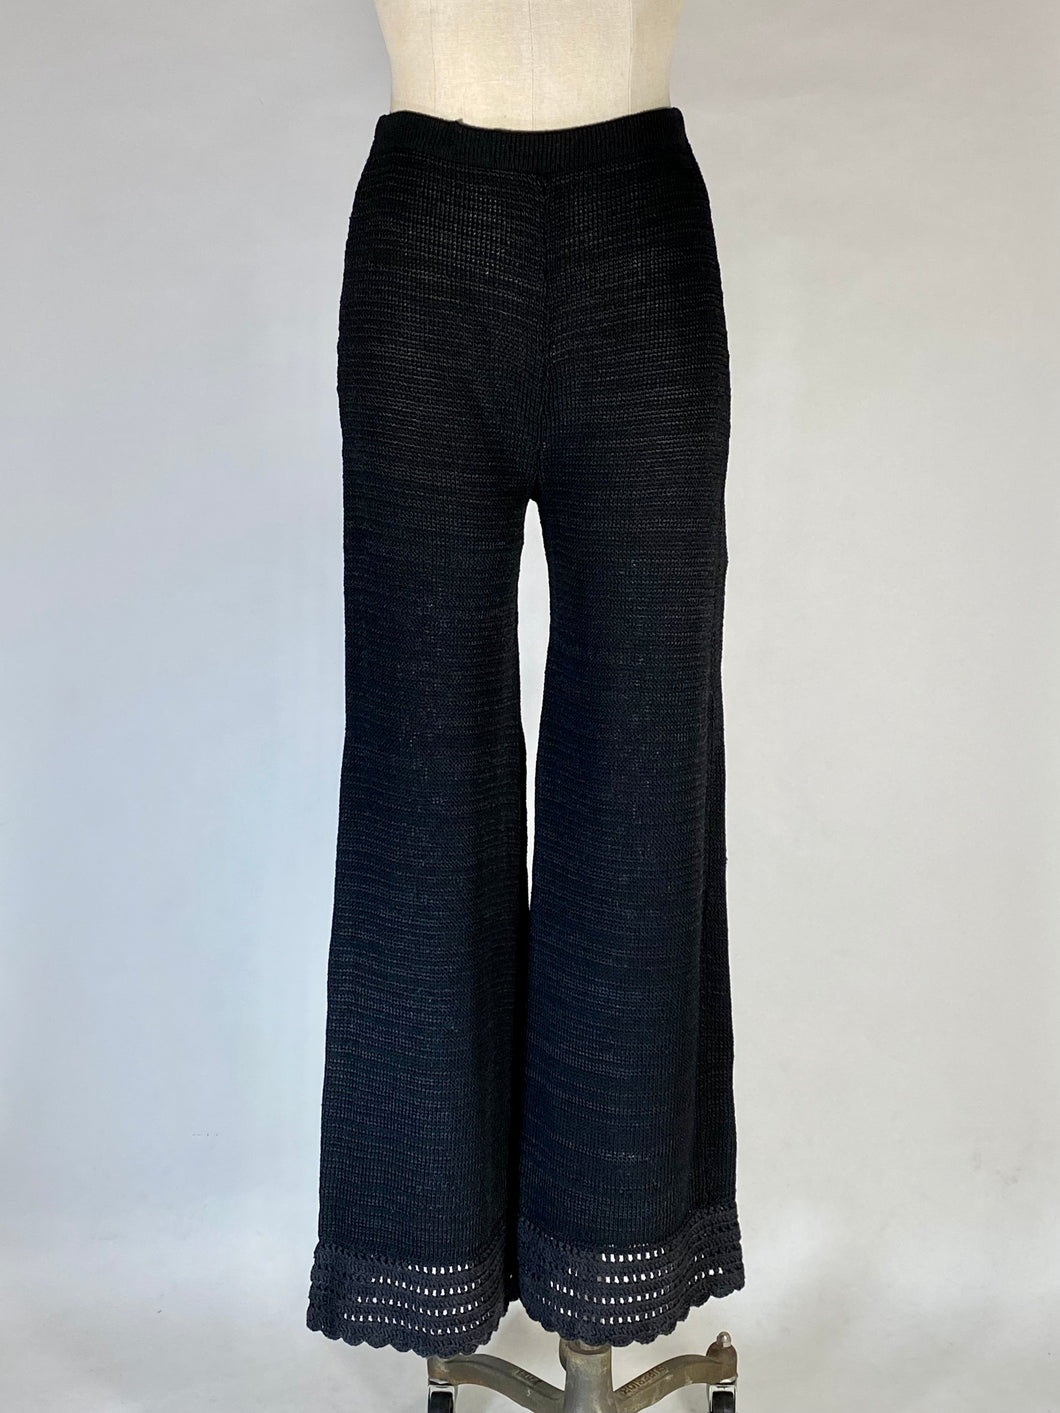 1970's Handmade Black CROCHET wide leg palazzo style bell bottom pants size Small